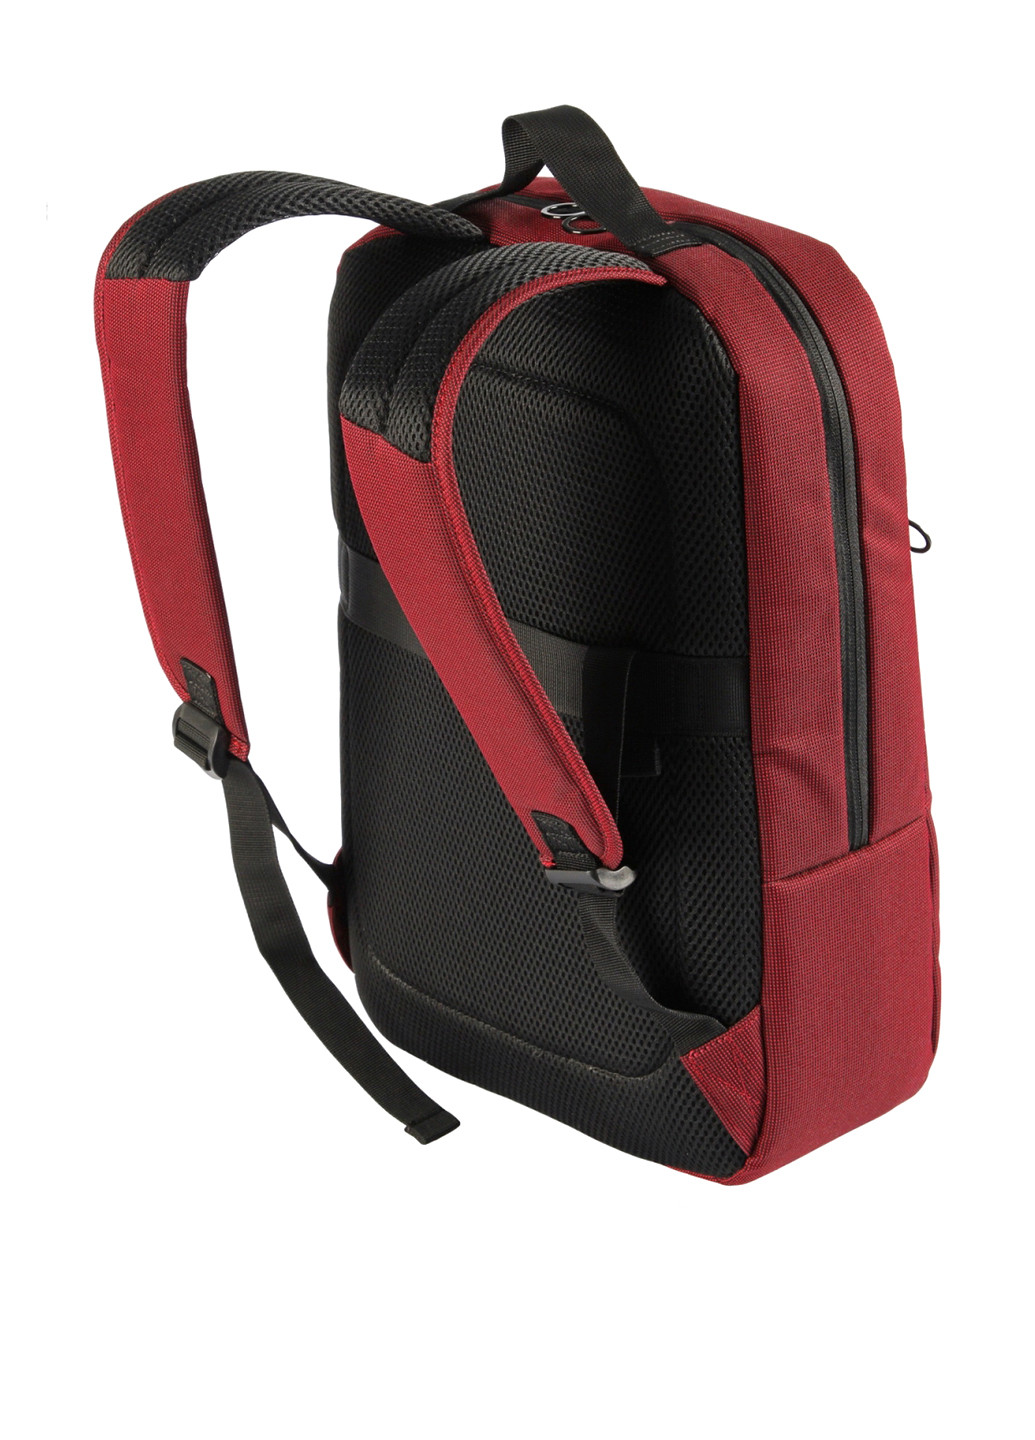 Рюкзак для ноутбука Loop Backpack 15.6, (бургунди) Tucano BKLOOP15-BX бордовий